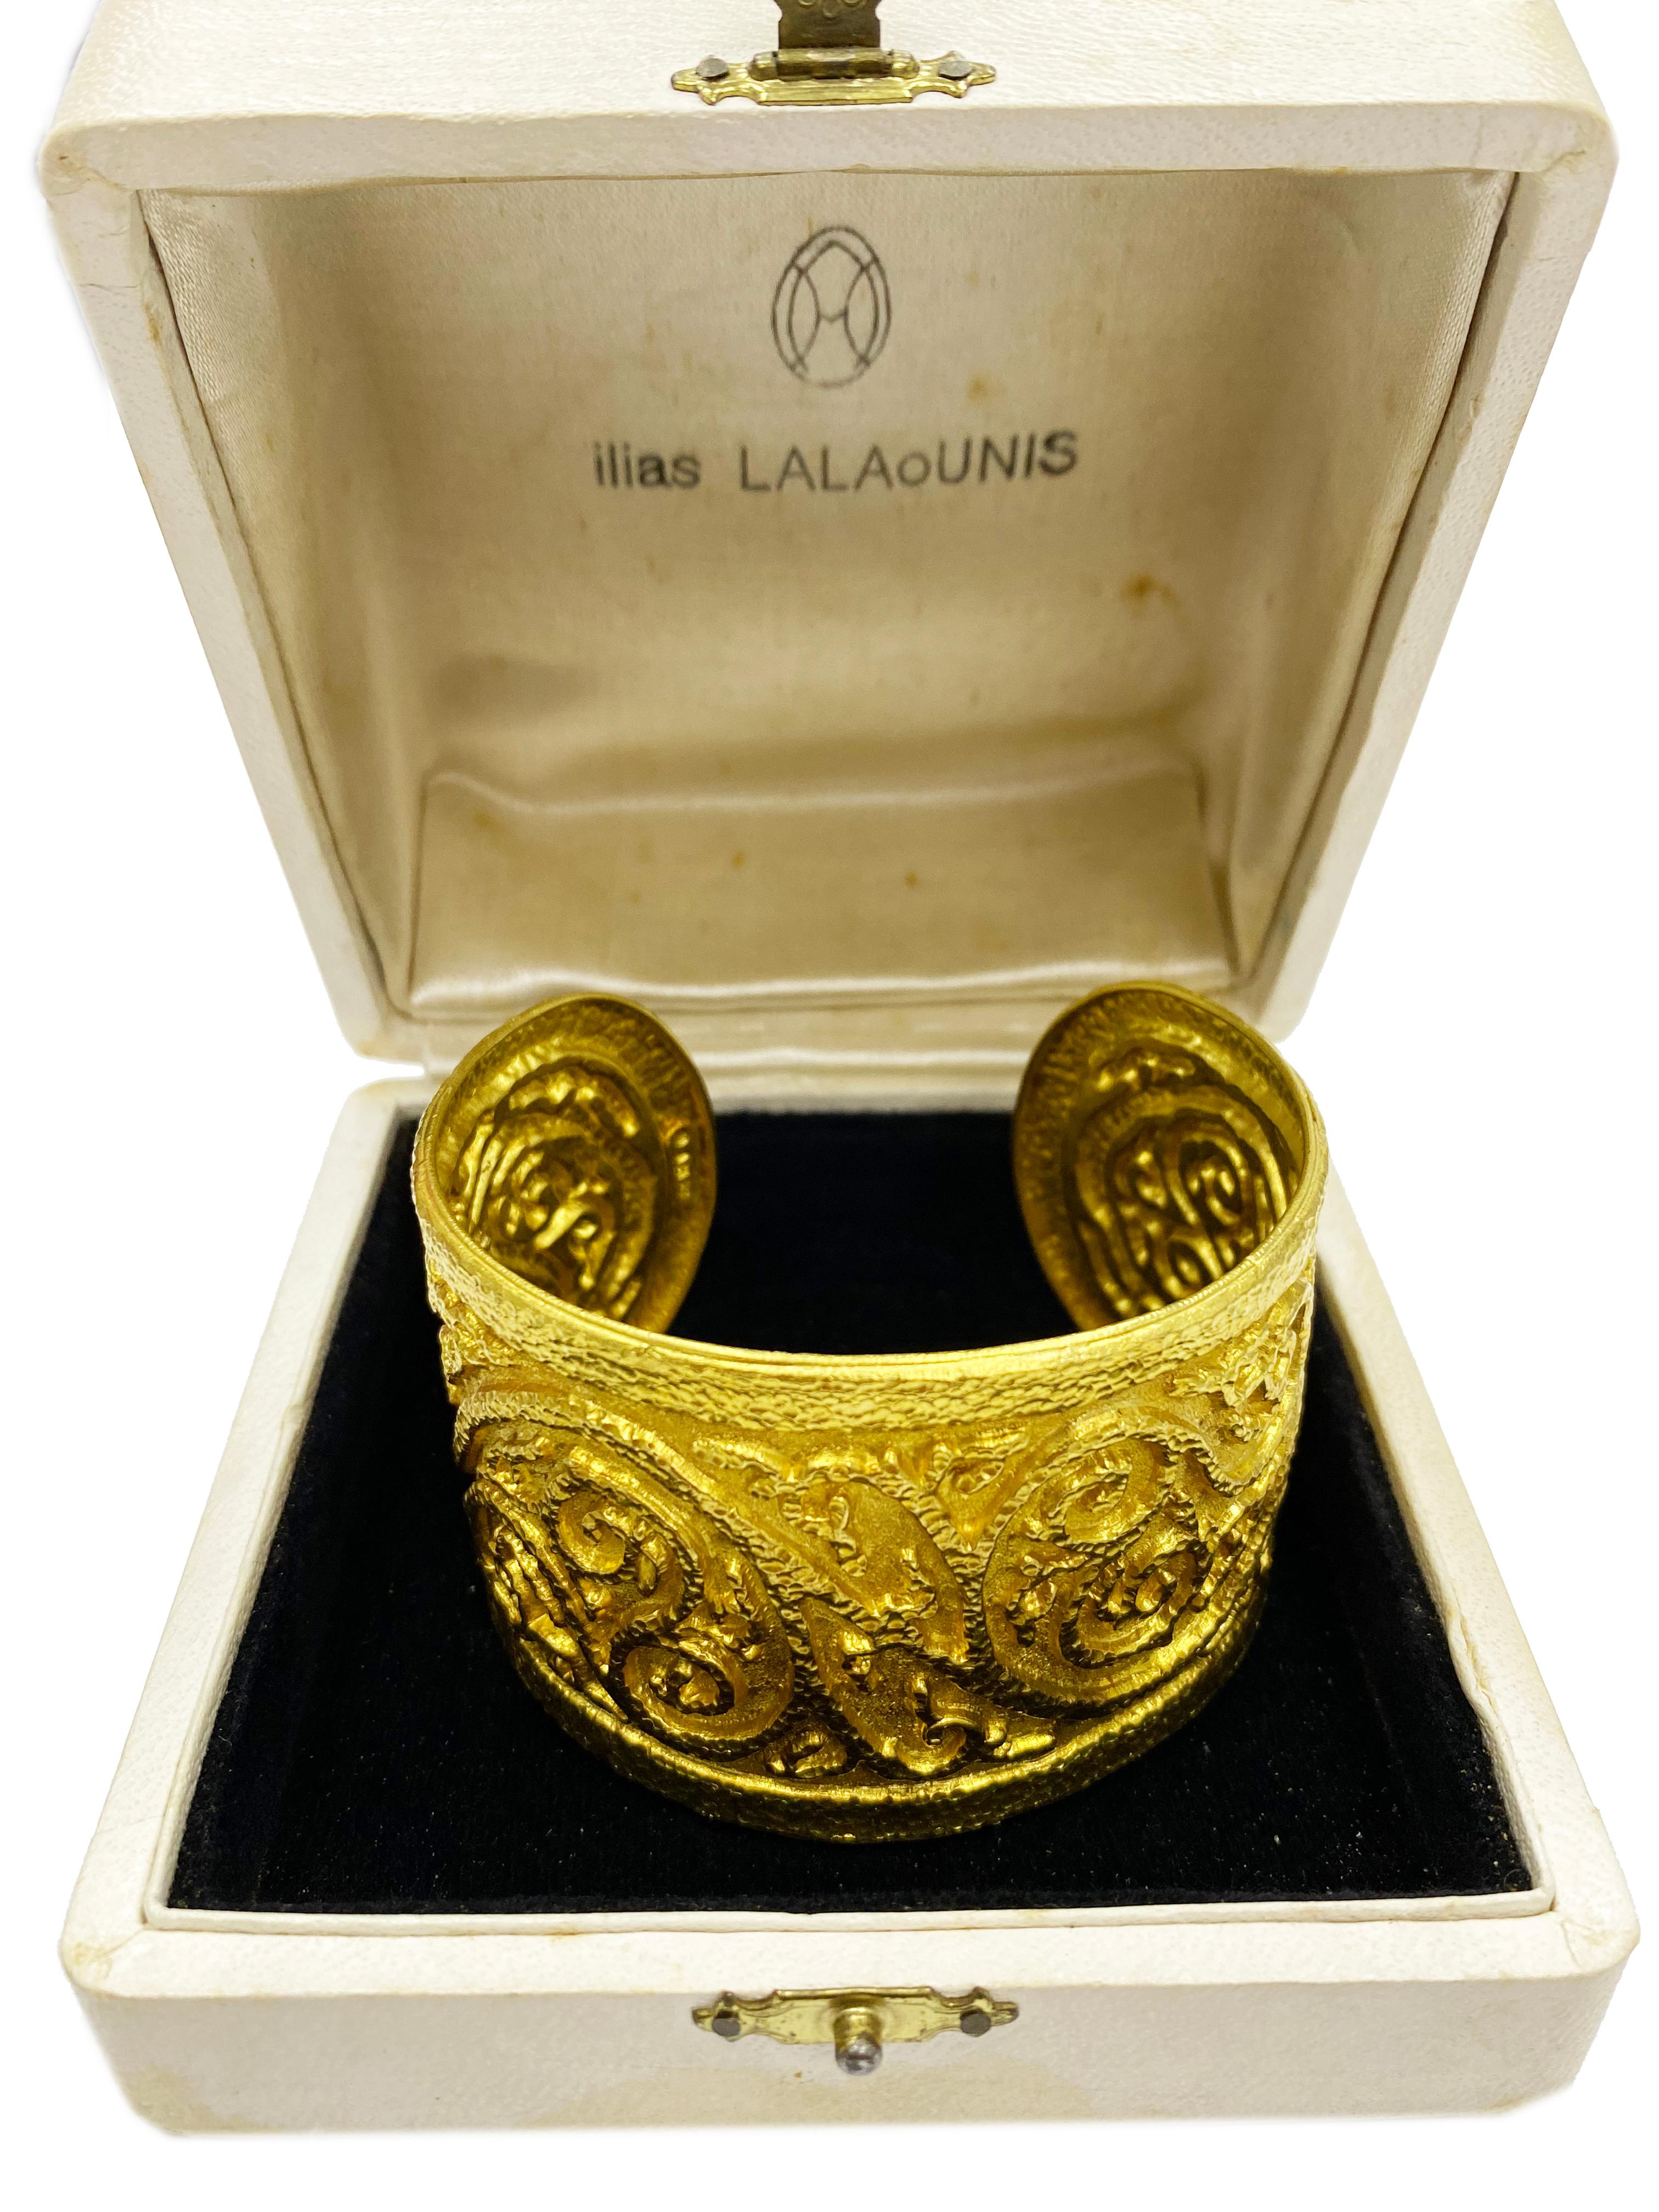 Iilias Lalaounis 22k Gold Cuff Bangle Bracelet 4